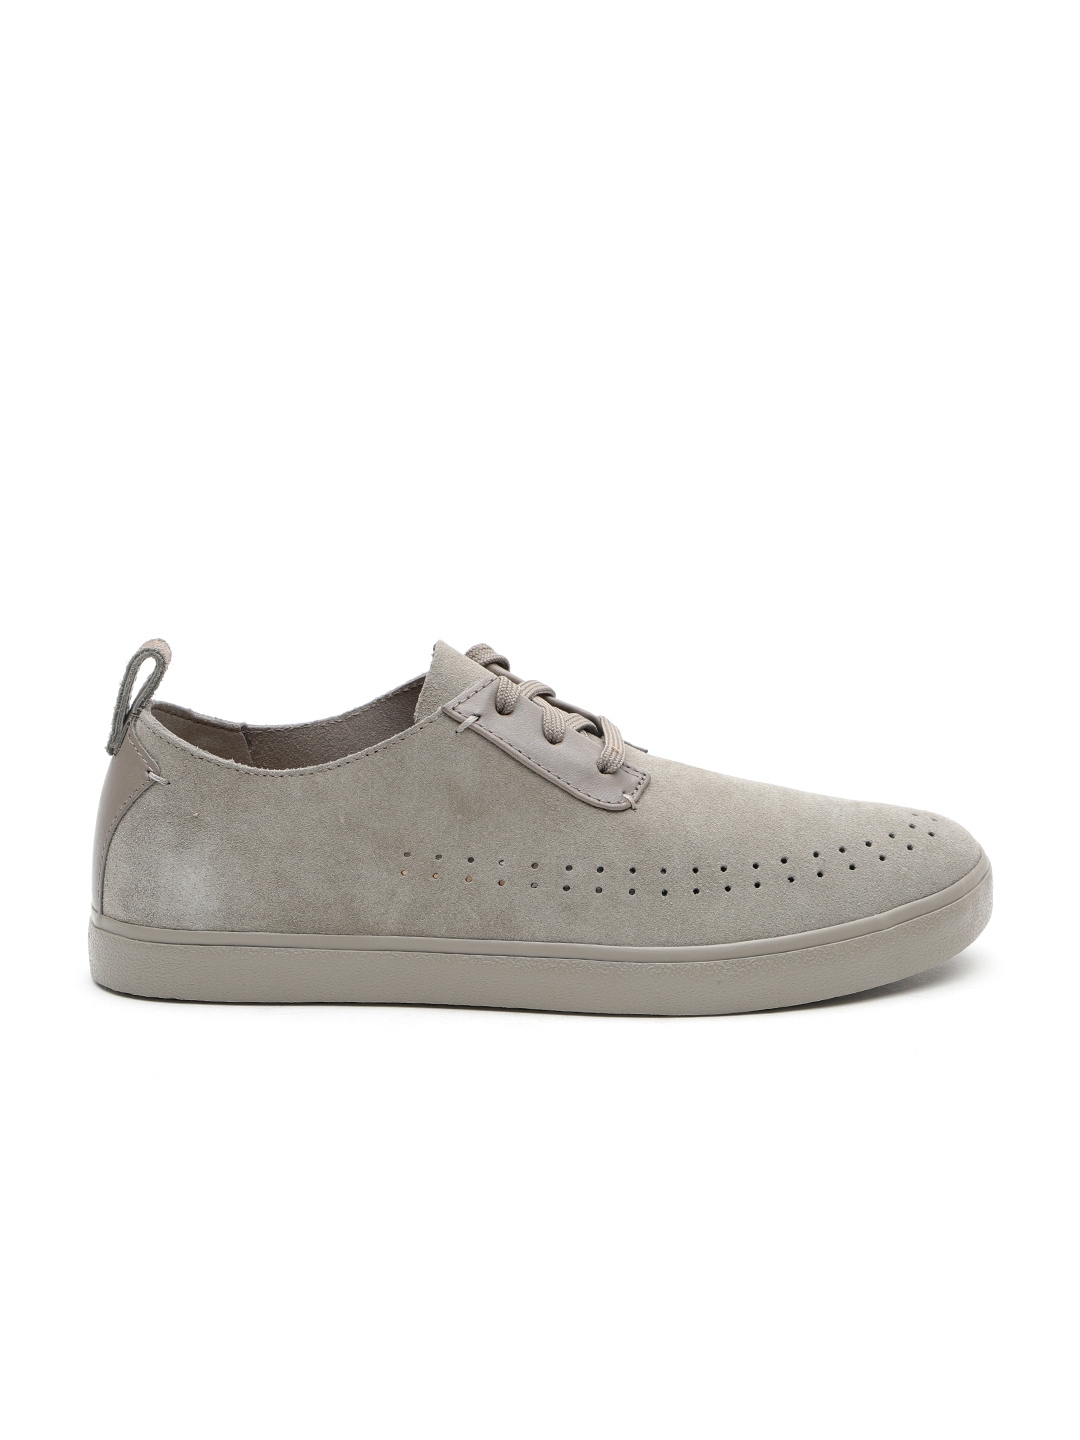 Buy Clarks Men Grey Suede Sneakers - Casual Shoes for Men 6839063 | Myntra